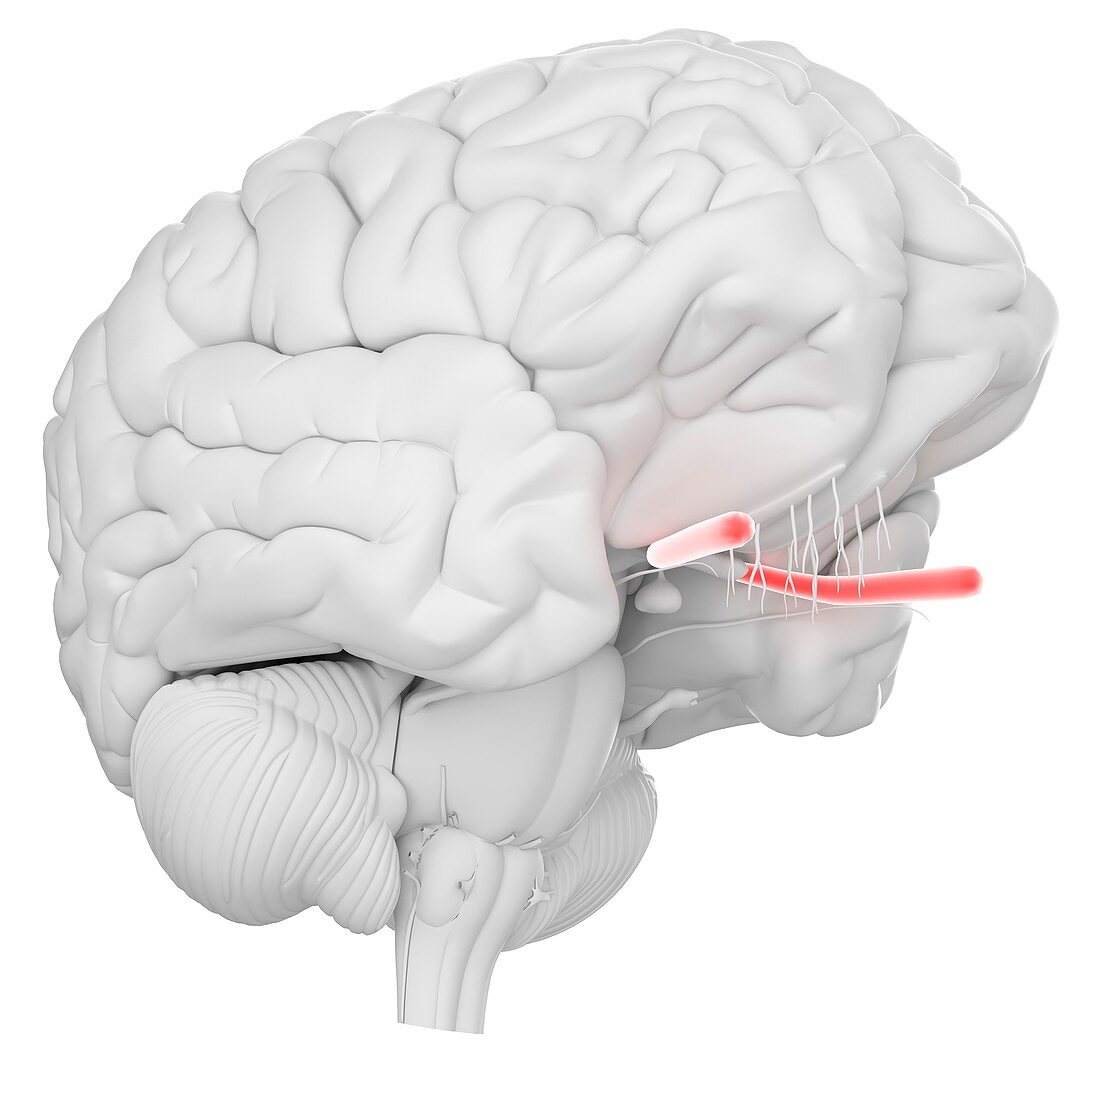 Human brain optic nerve, illustration